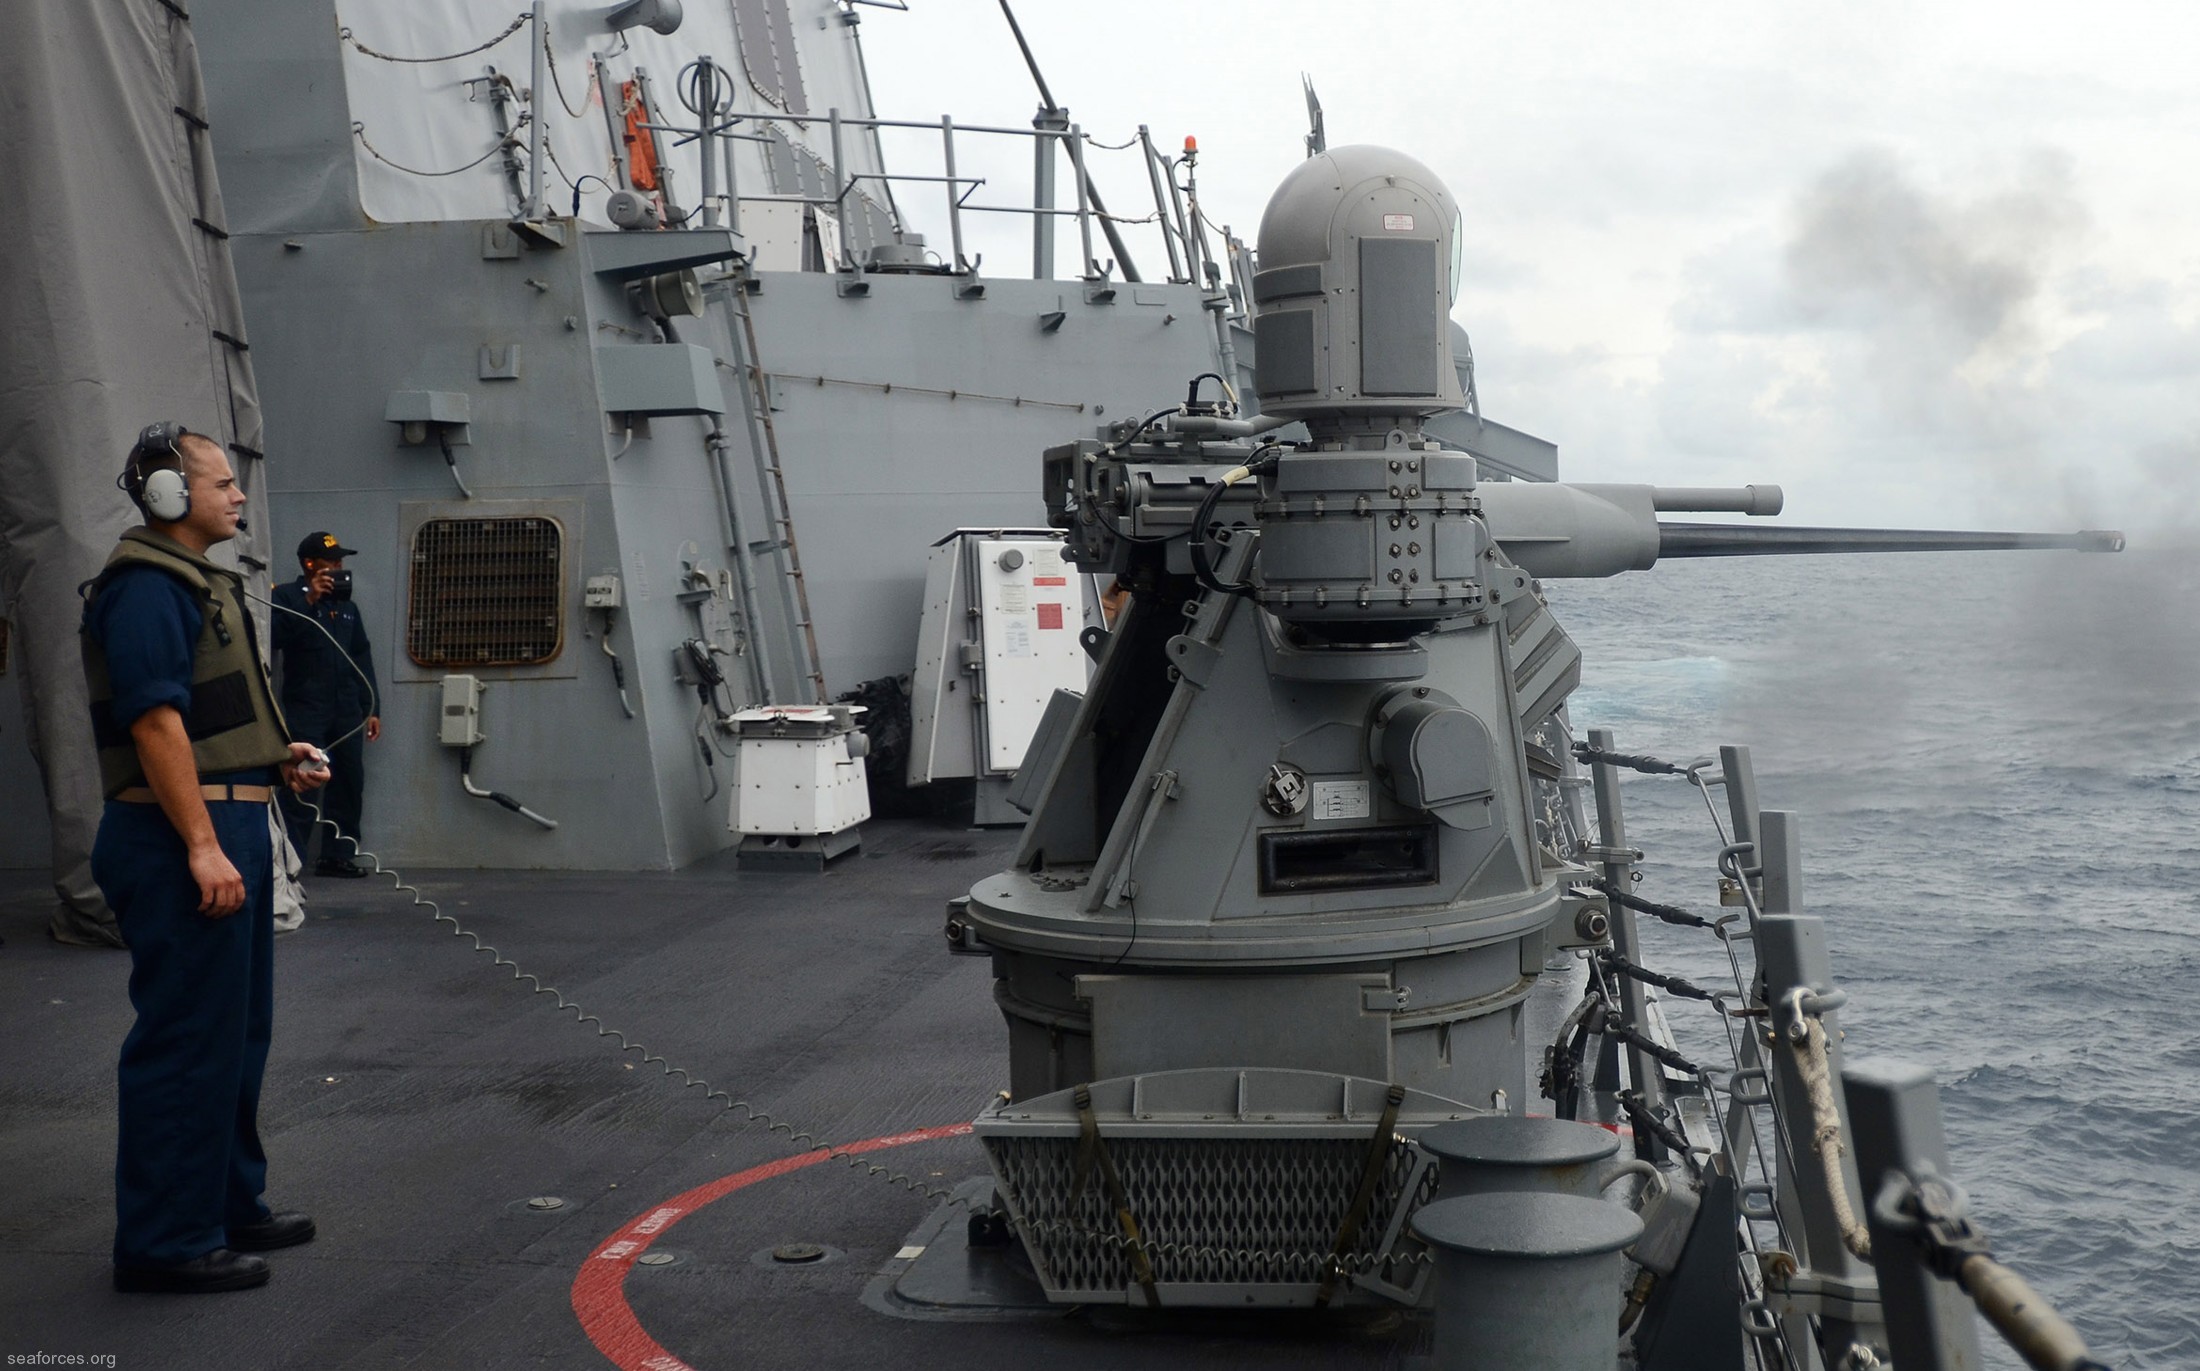 ddg-62 uss fitzgerald guided missile destroyer 2013 49 mk-38 mod.2 25mm machine gun system